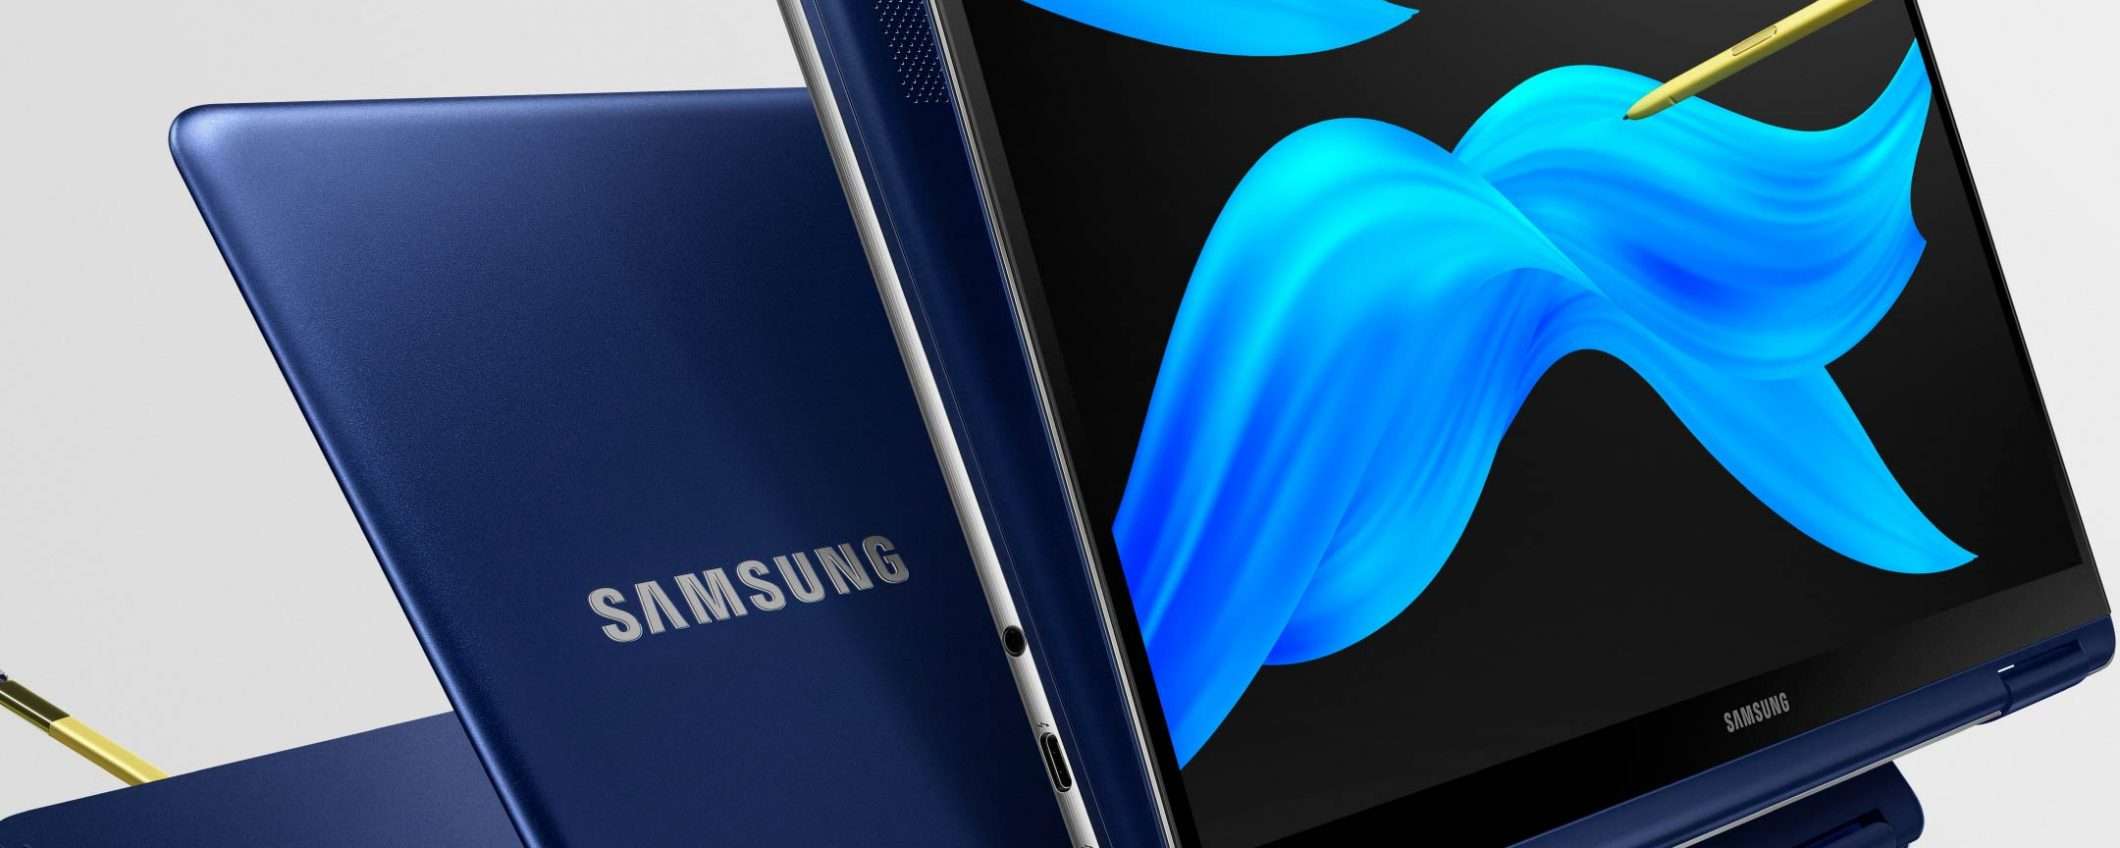 Samsung Notebook 9 Pen: presentata l'edizione 2019